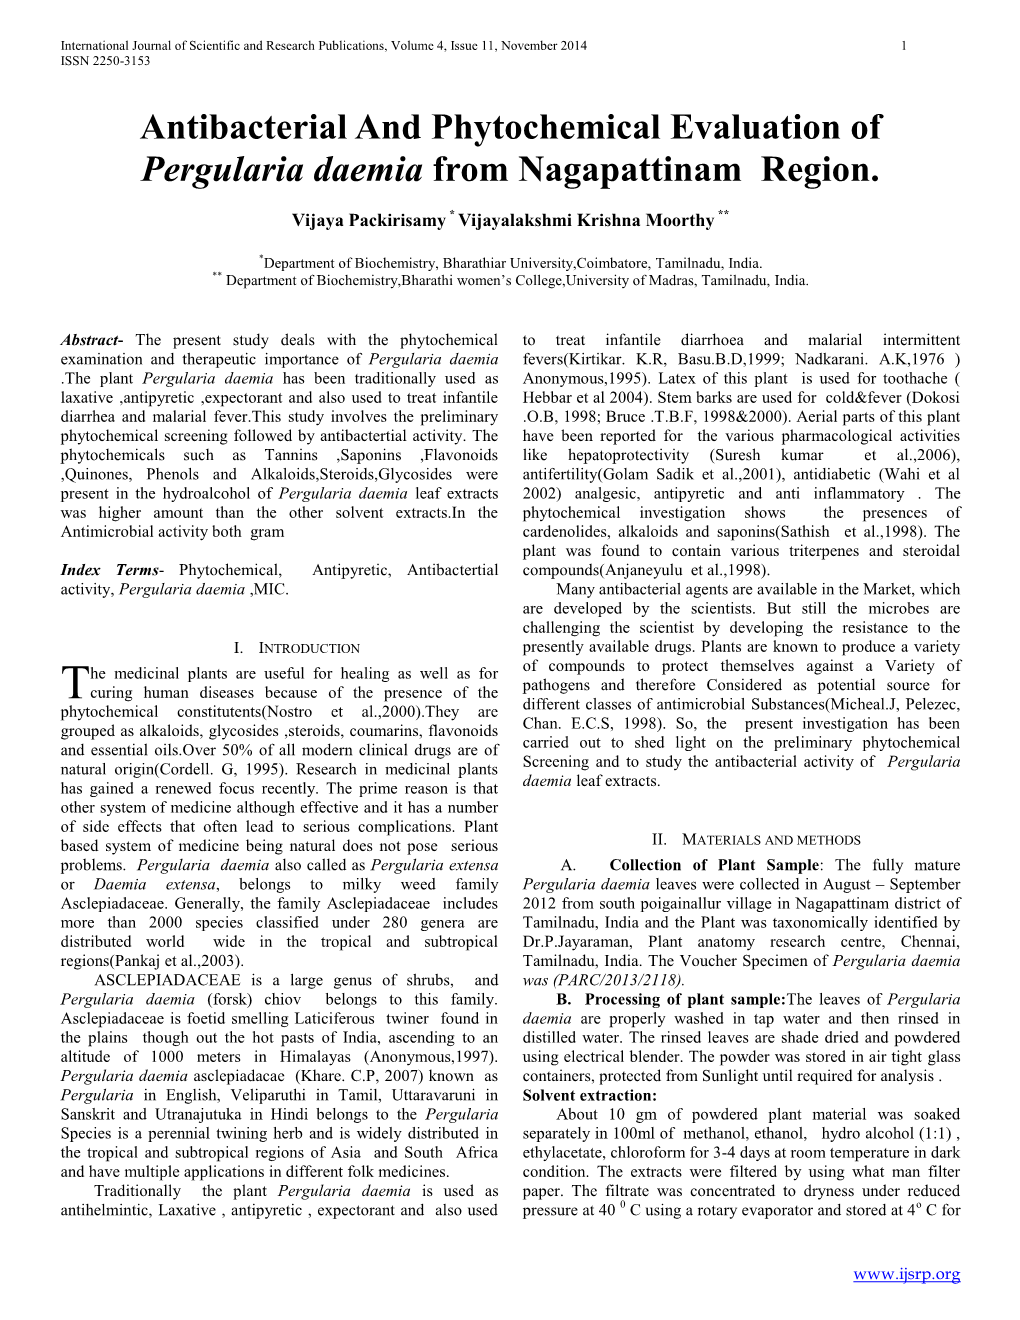 Antibacterial and Phytochemical Evaluation of Pergularia Daemia from Nagapattinam Region